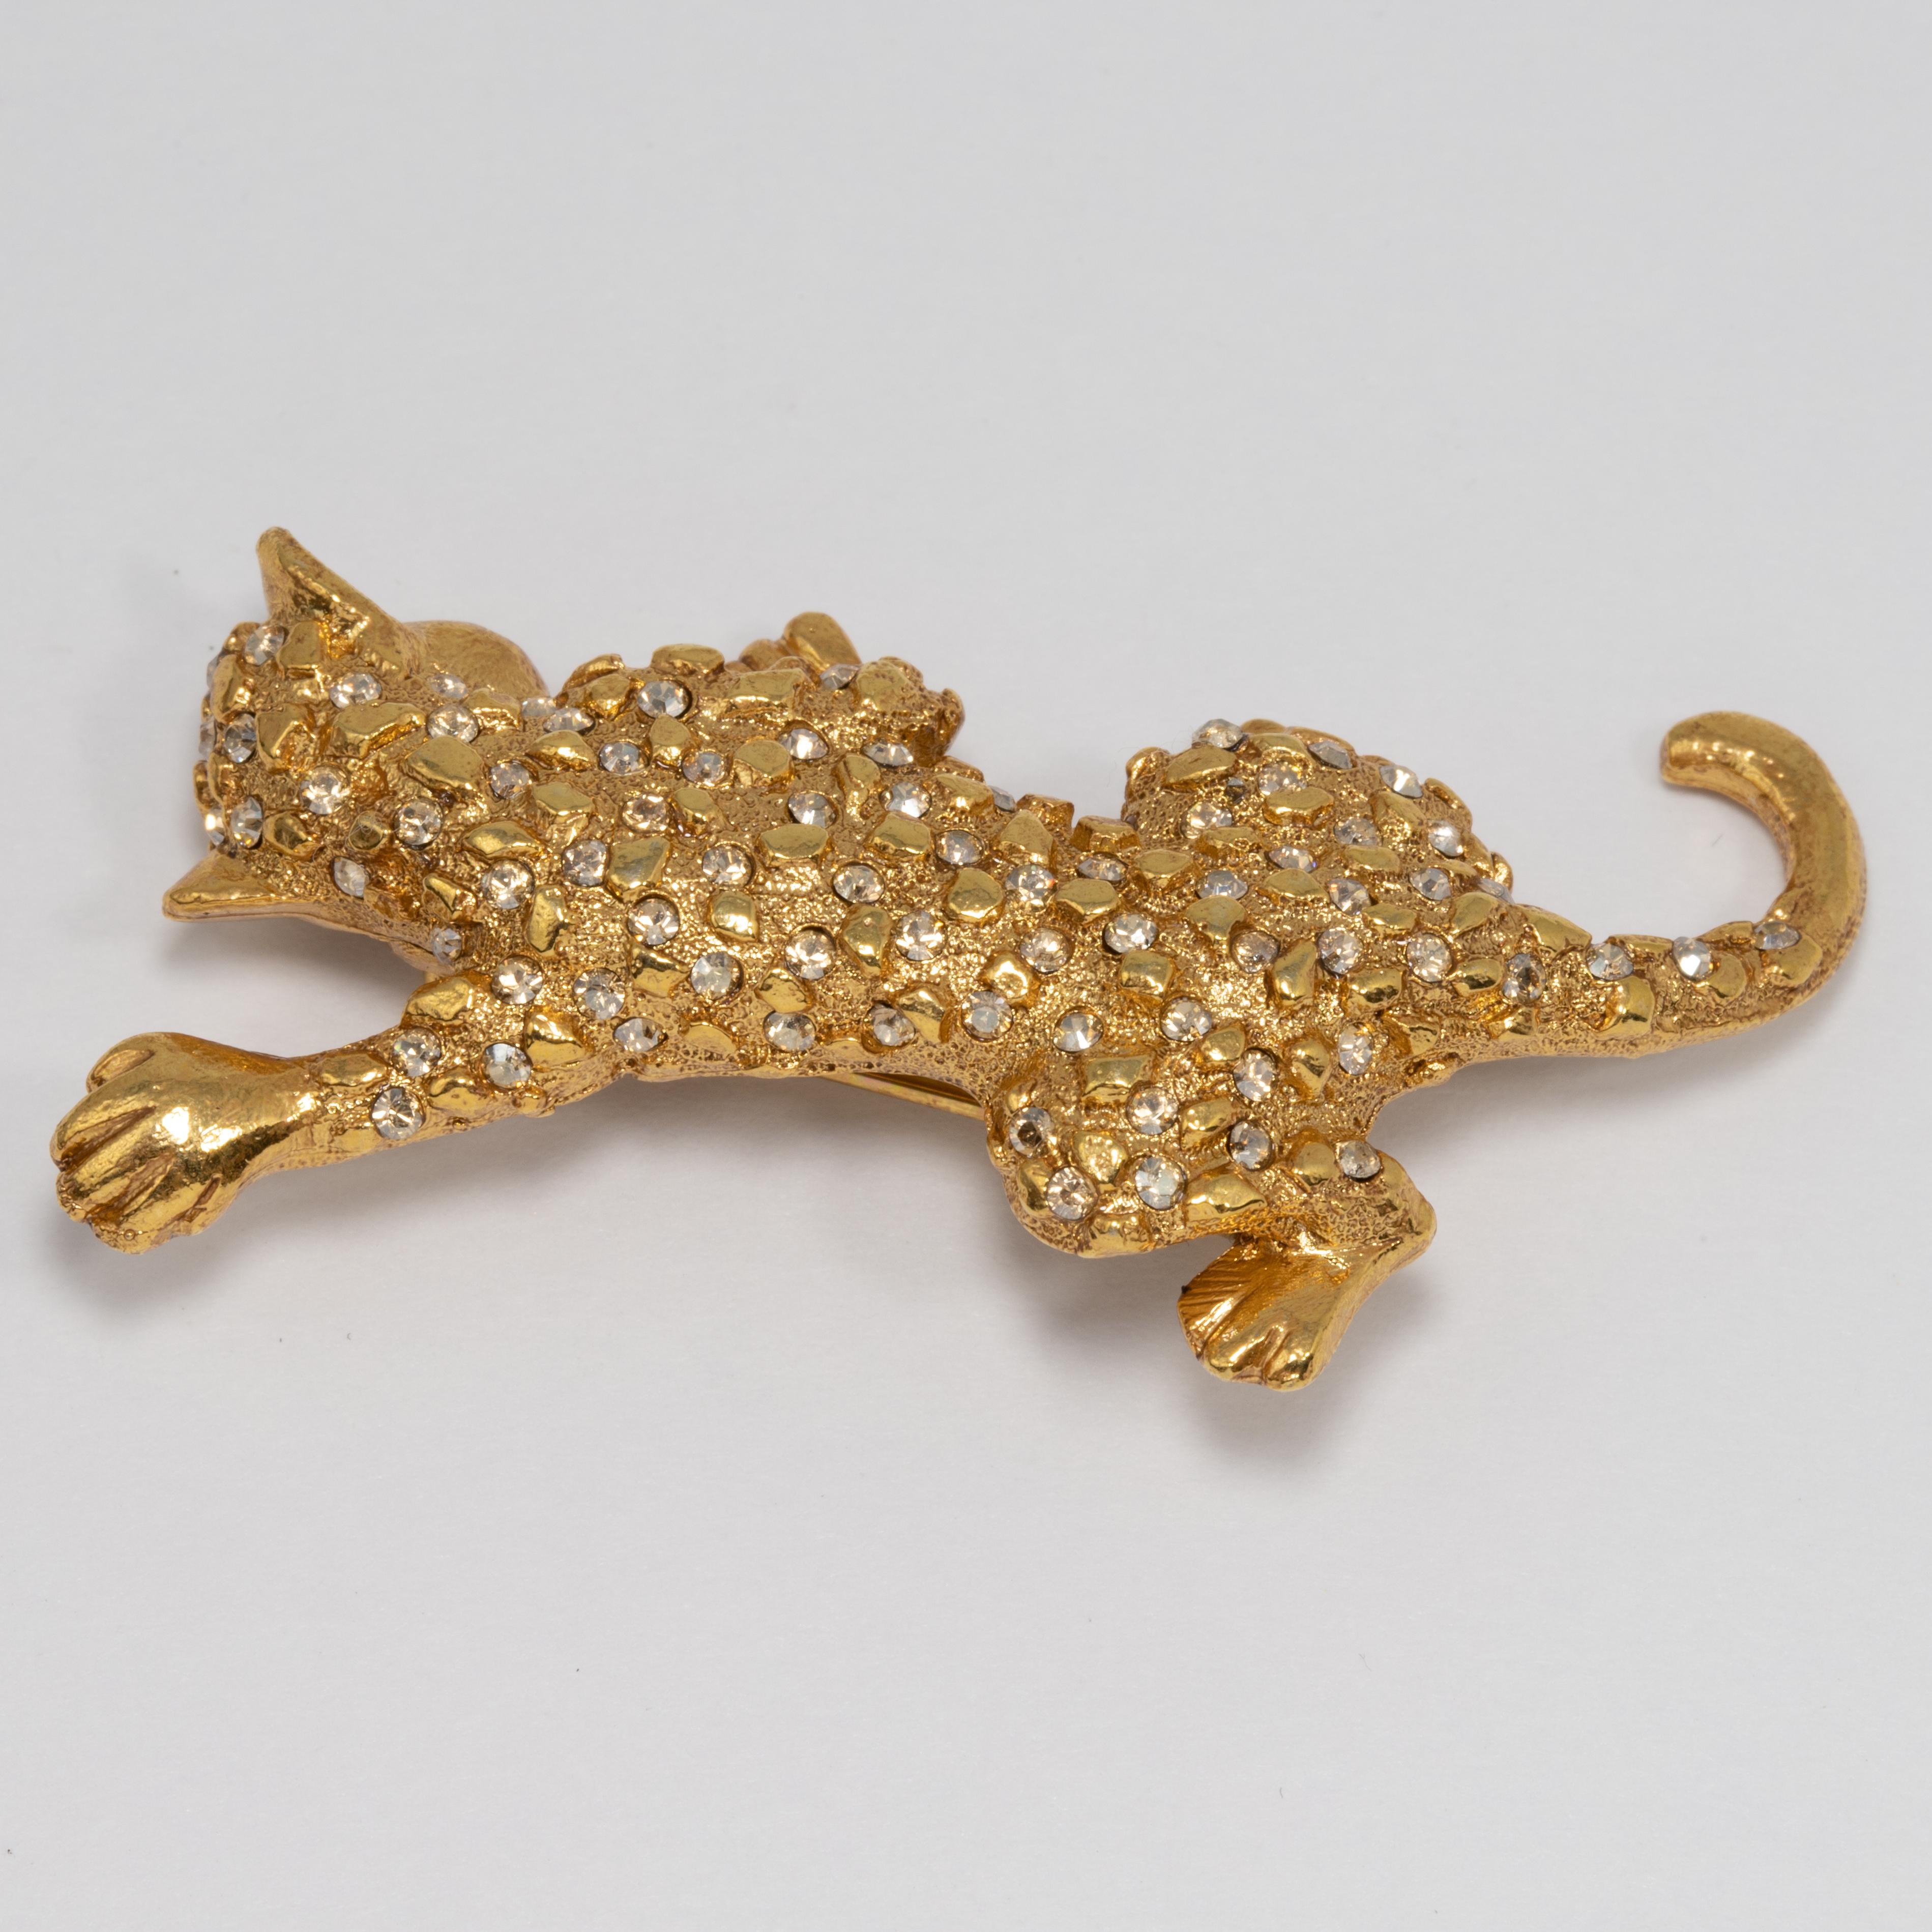 An embellished leopard pin brooch by Oscar de la Renta. This gold-tone wildcat is decorated with black diamond Swarovski crystals.

Hallmarks: Oscar de la Renta, Made in USA